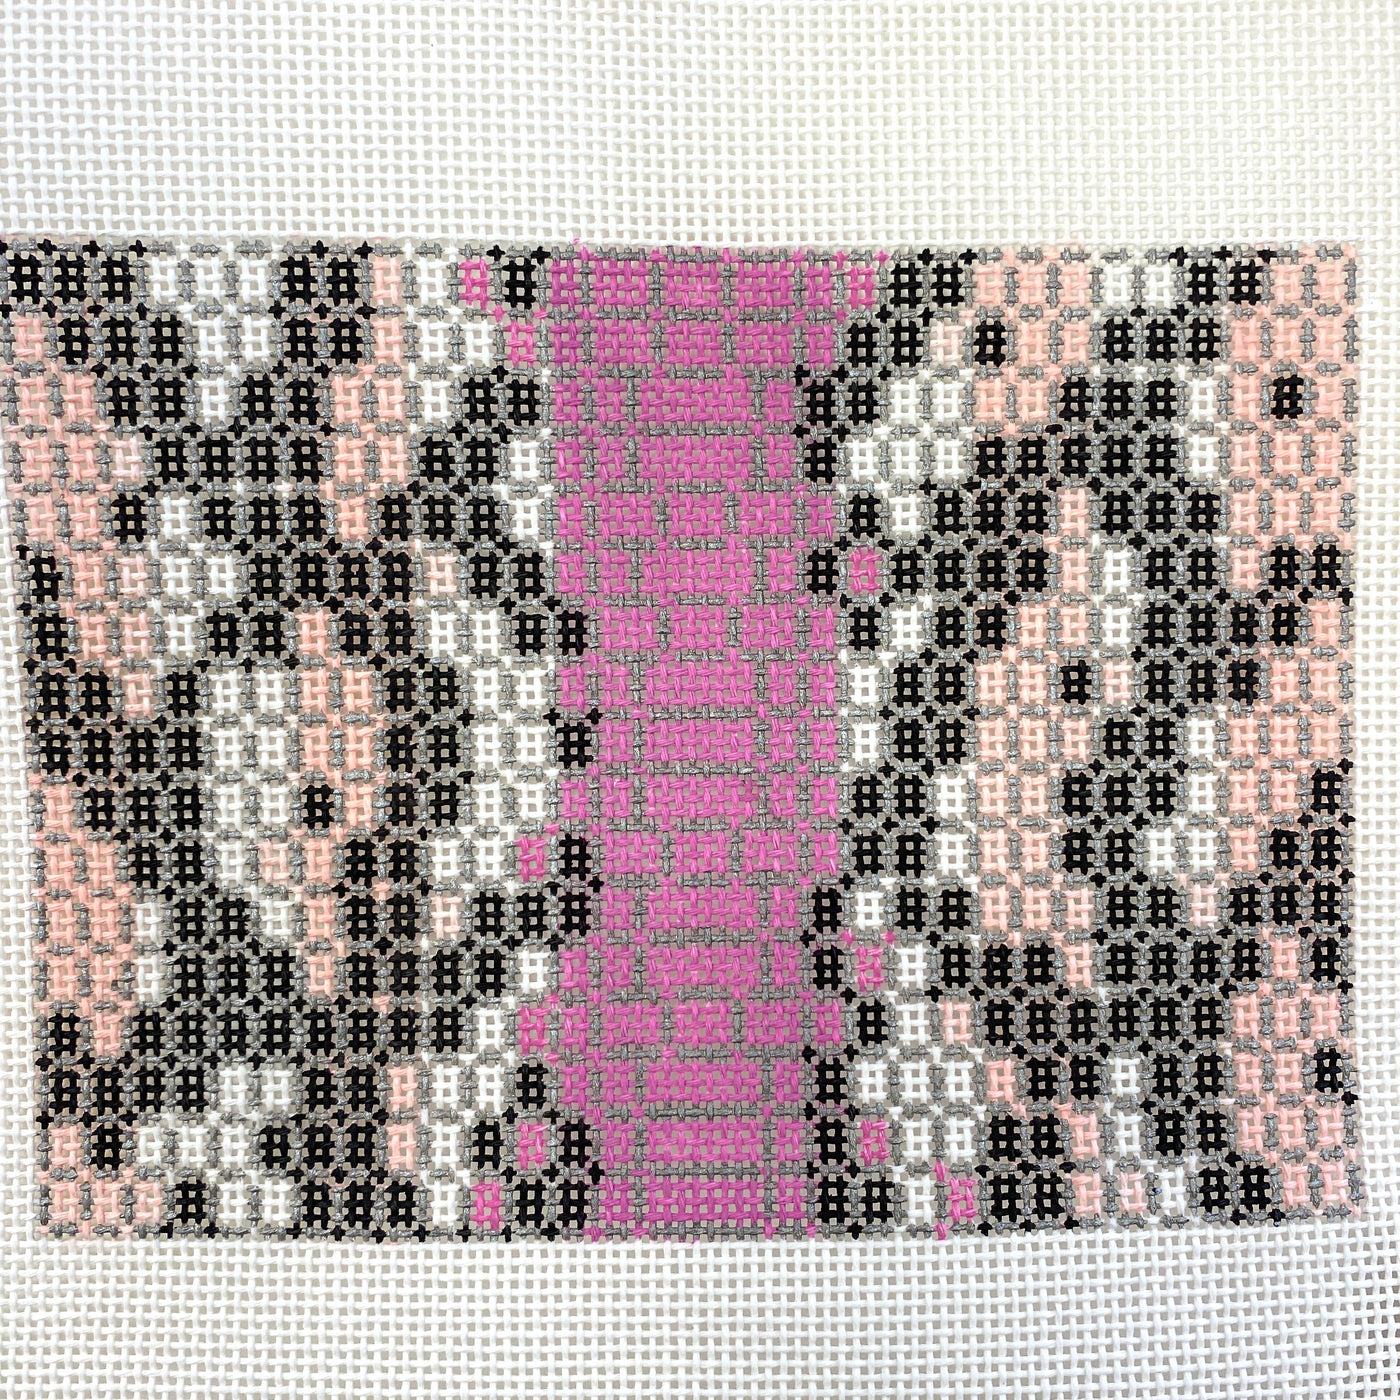 Snakeskin Mini Flat Clutch - Pink Needlepoint Canvas